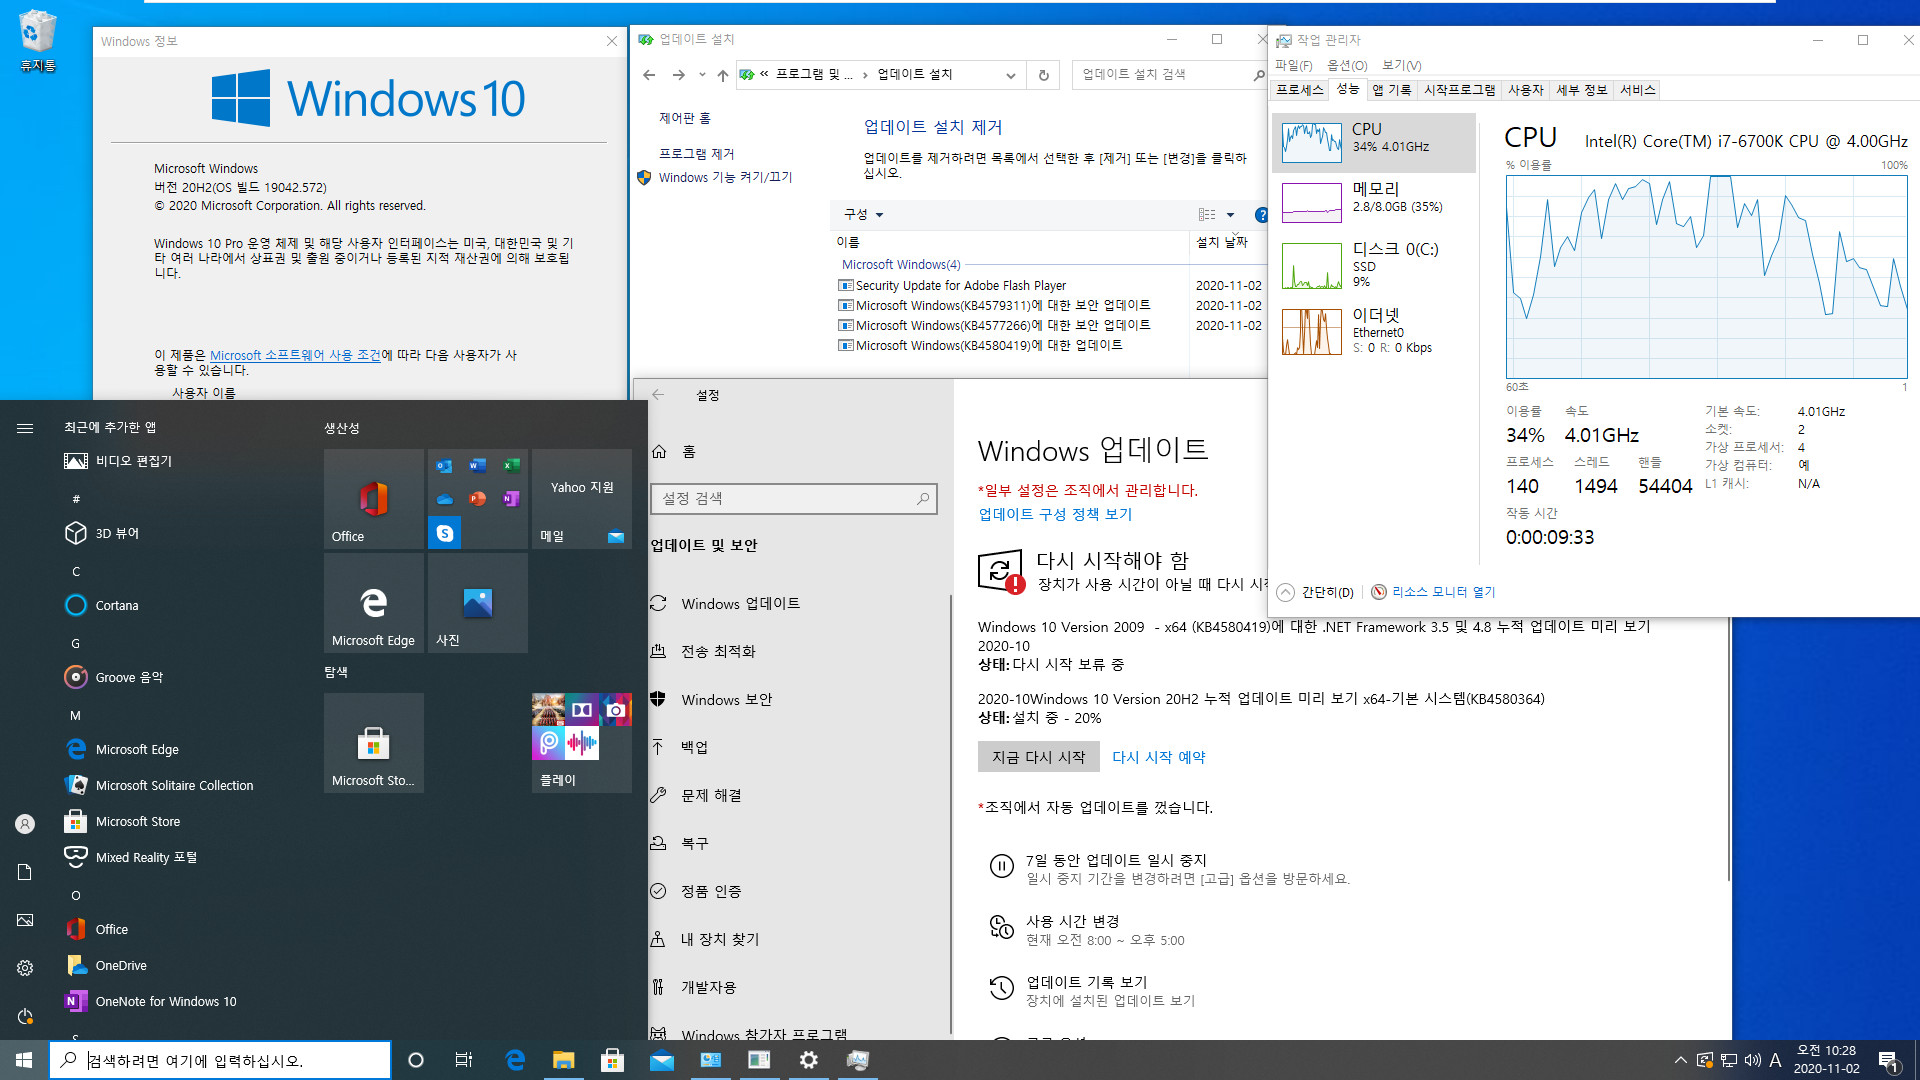 Windows 10 버전 20H2 기능 업데이트 KB4562830 폴더의 mum 파일들만 찾아서 설치하기.bat - 크로미엄 엣지 설치하지 않고 버전 20H2만 설치하기 테스트 - 뻘짓했네요 2020-11-02_102831.jpg